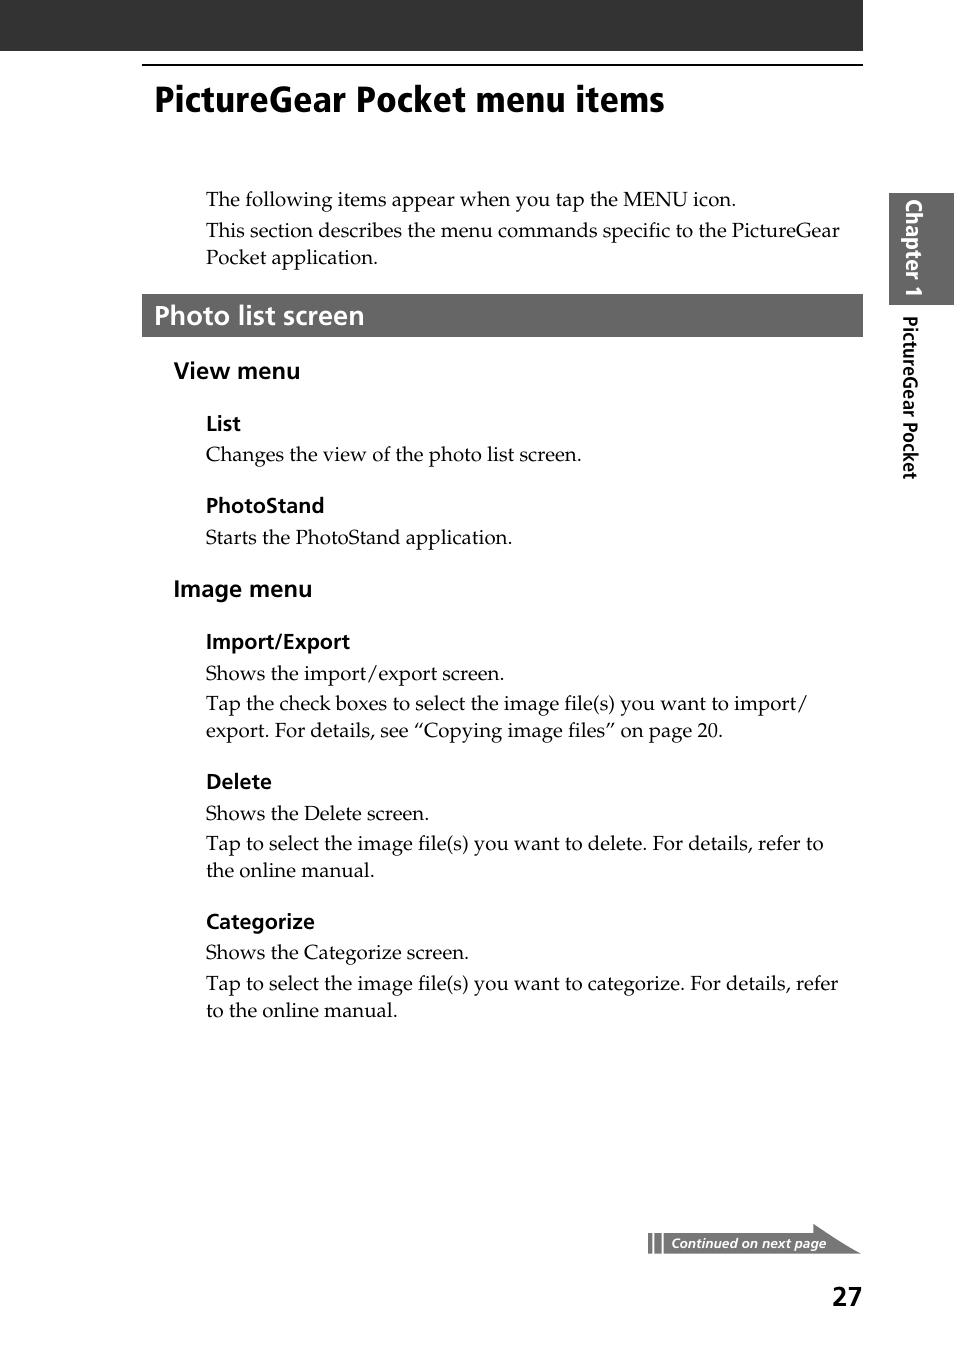 Picturegear pocket menu items, Photo list screen | Sony PEG-T615C User Manual | Page 27 / 104